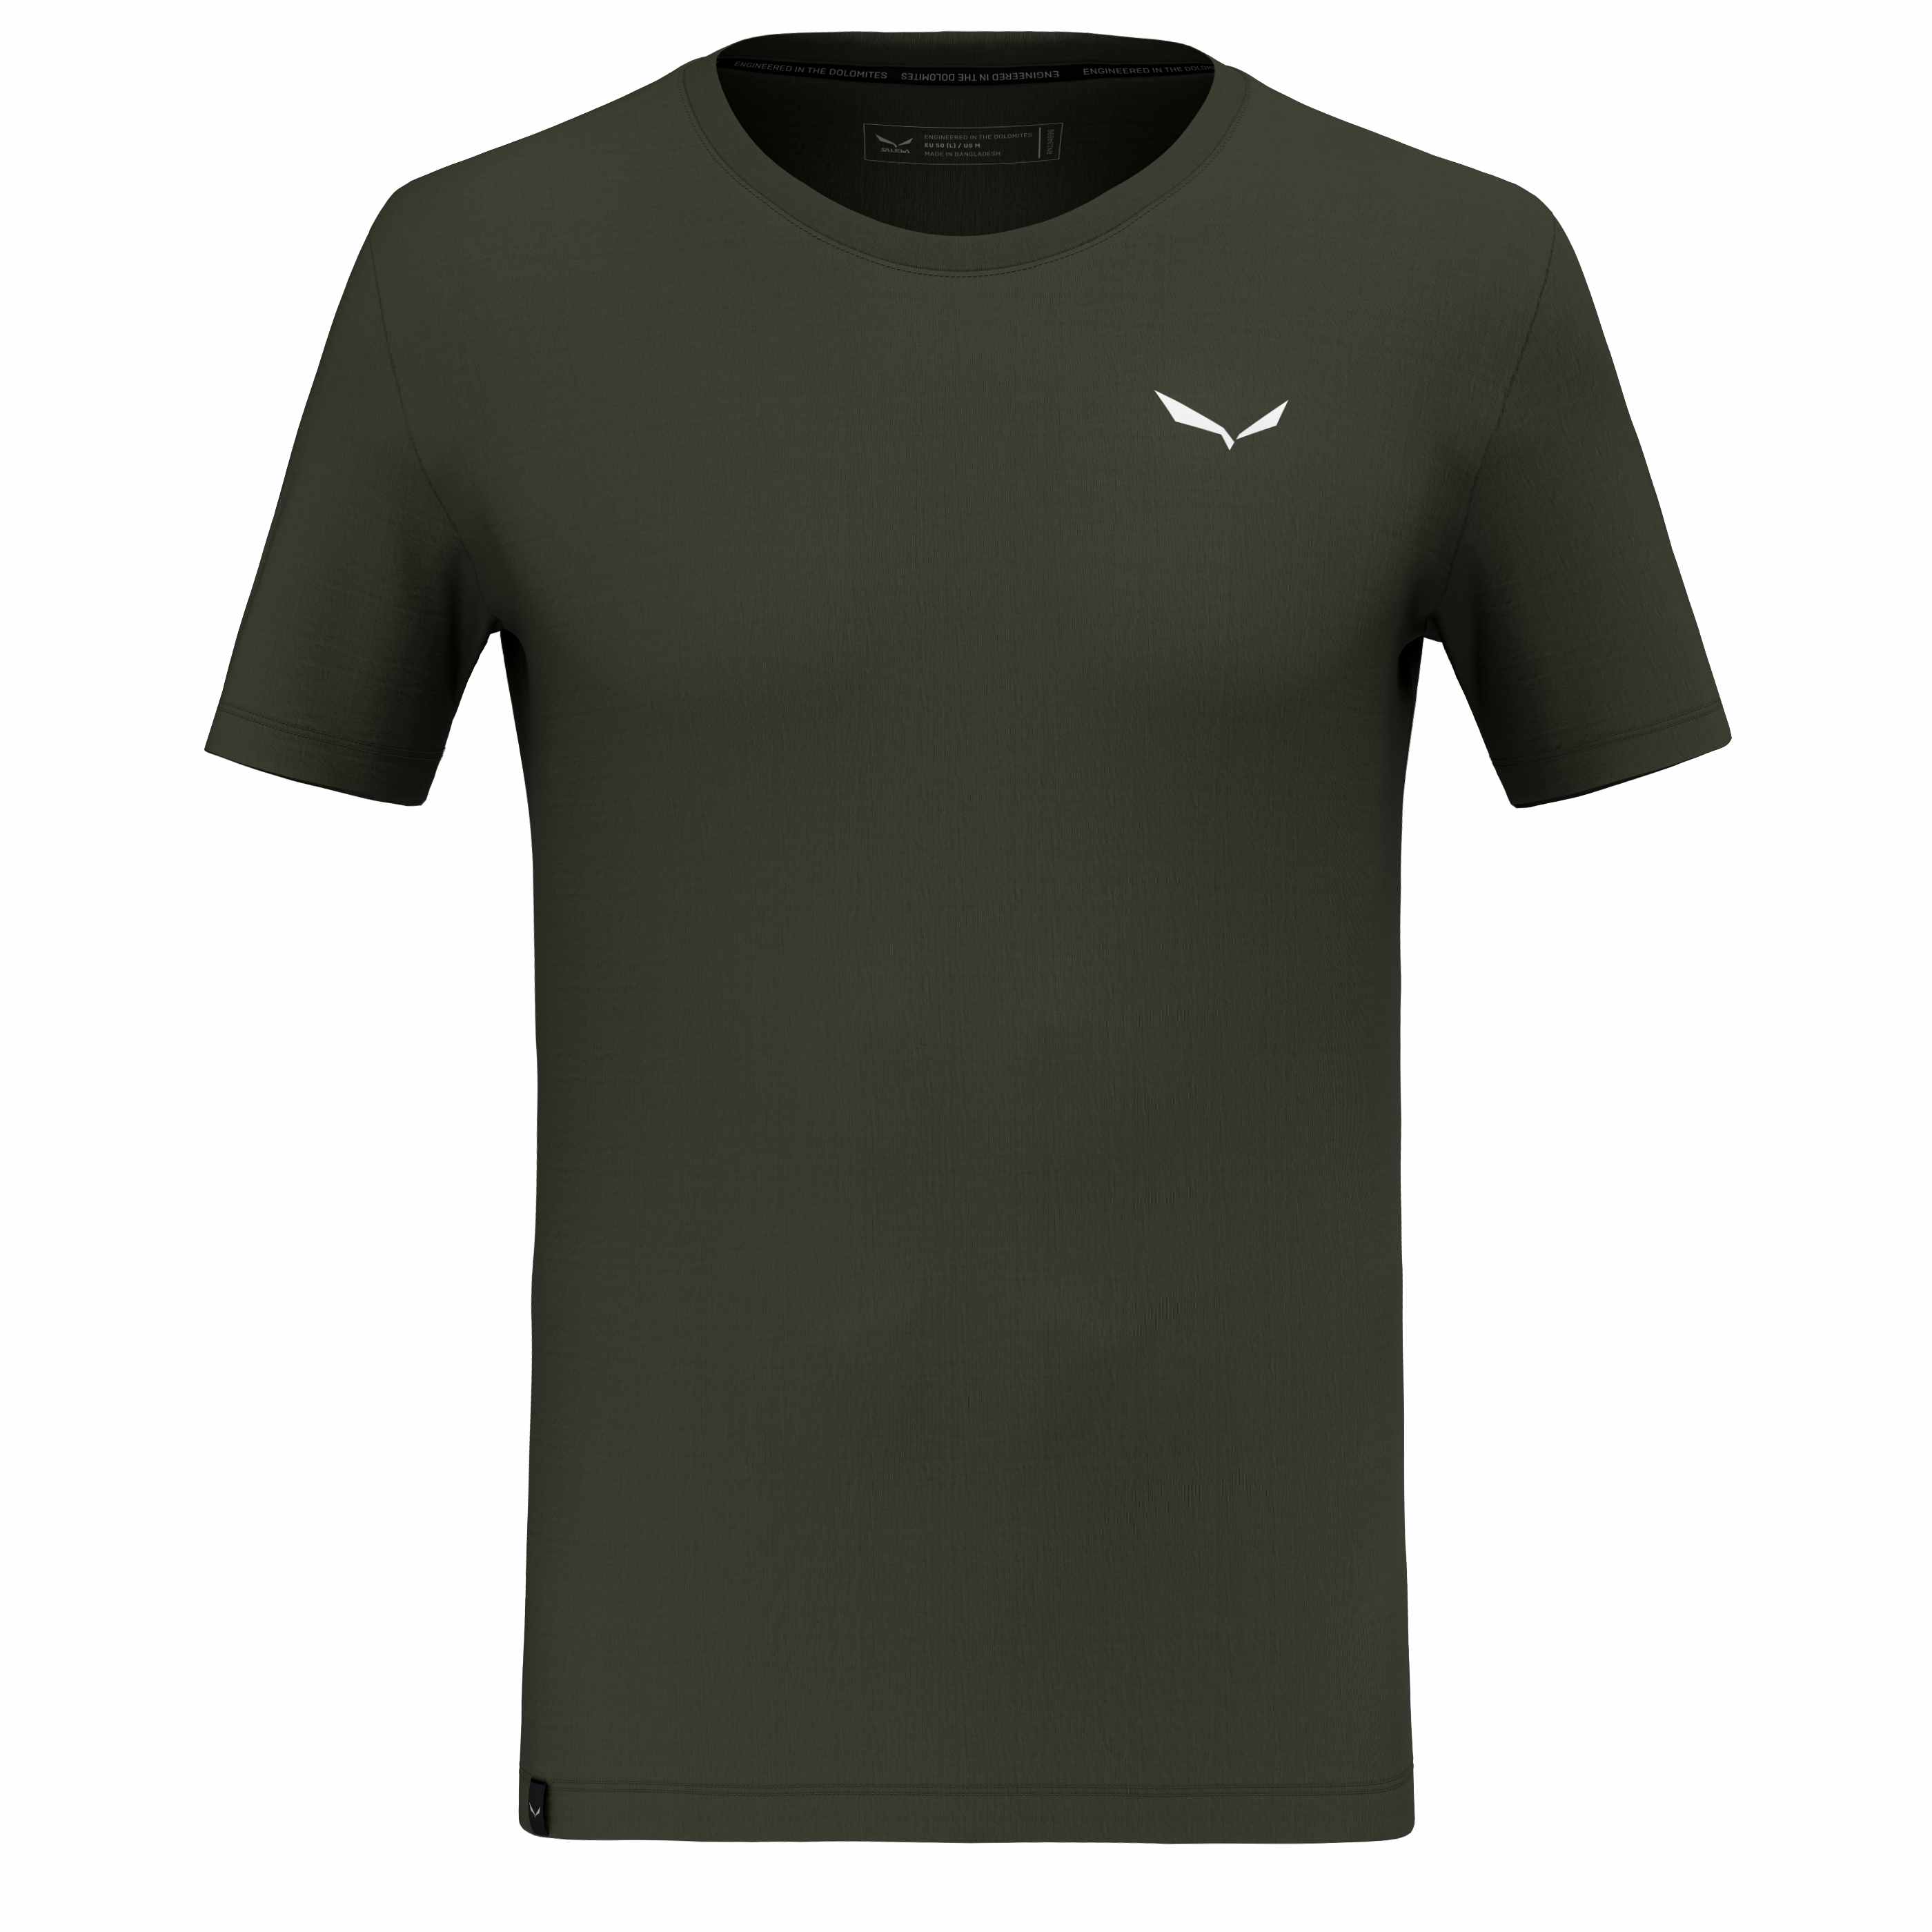 Salewa tričko Eagle Sheep Camp Dry M dark olive Velikost: XL